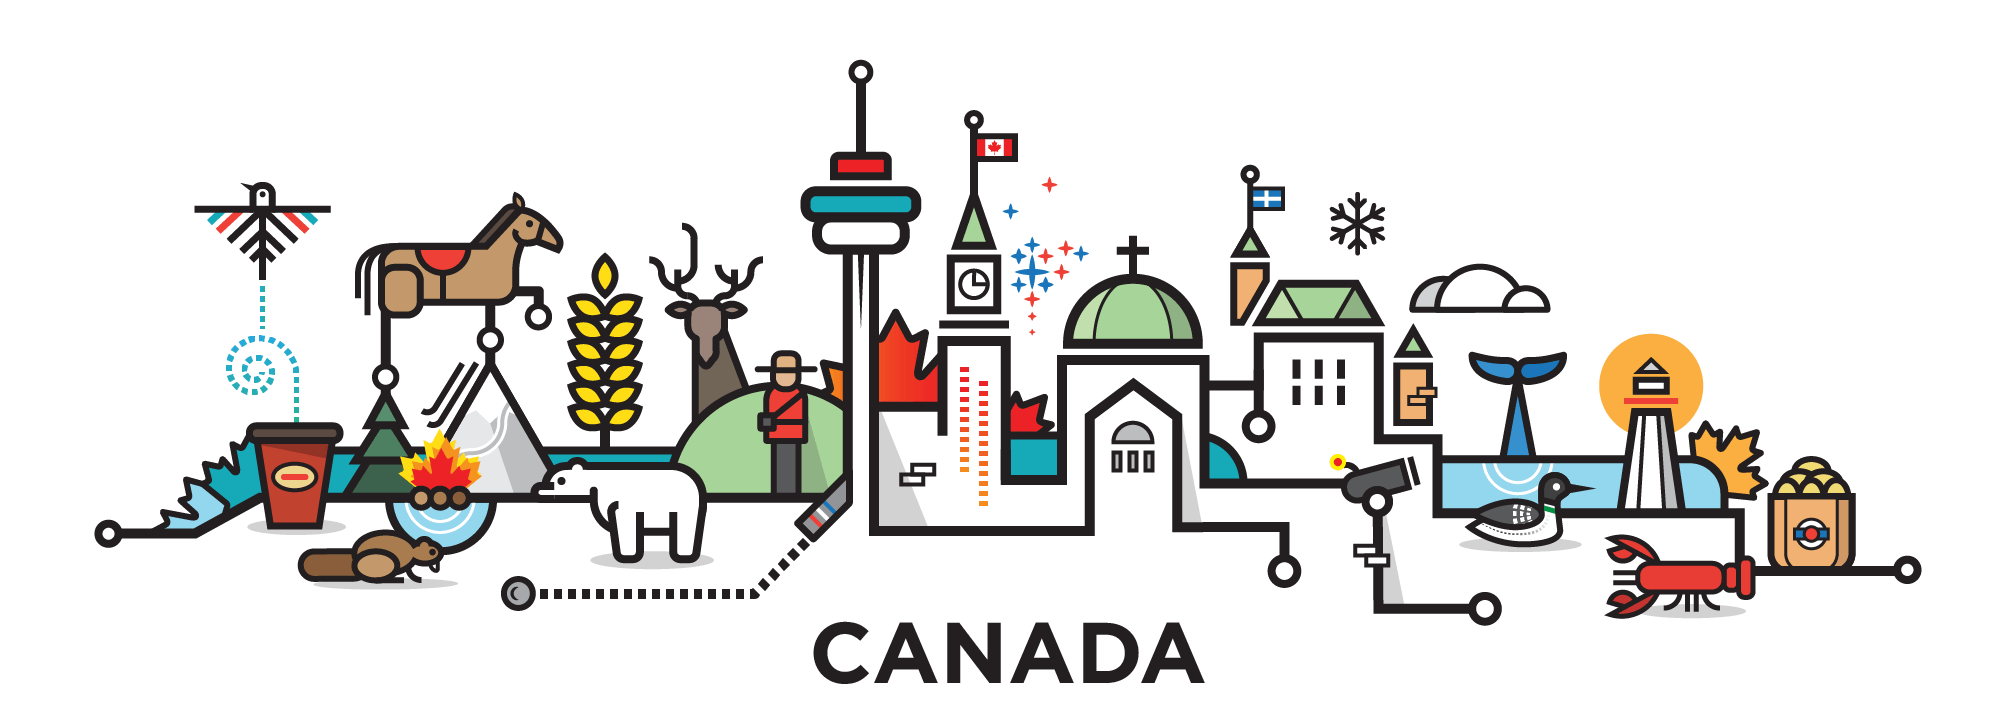 canada-cityline-illustration-by-loogart